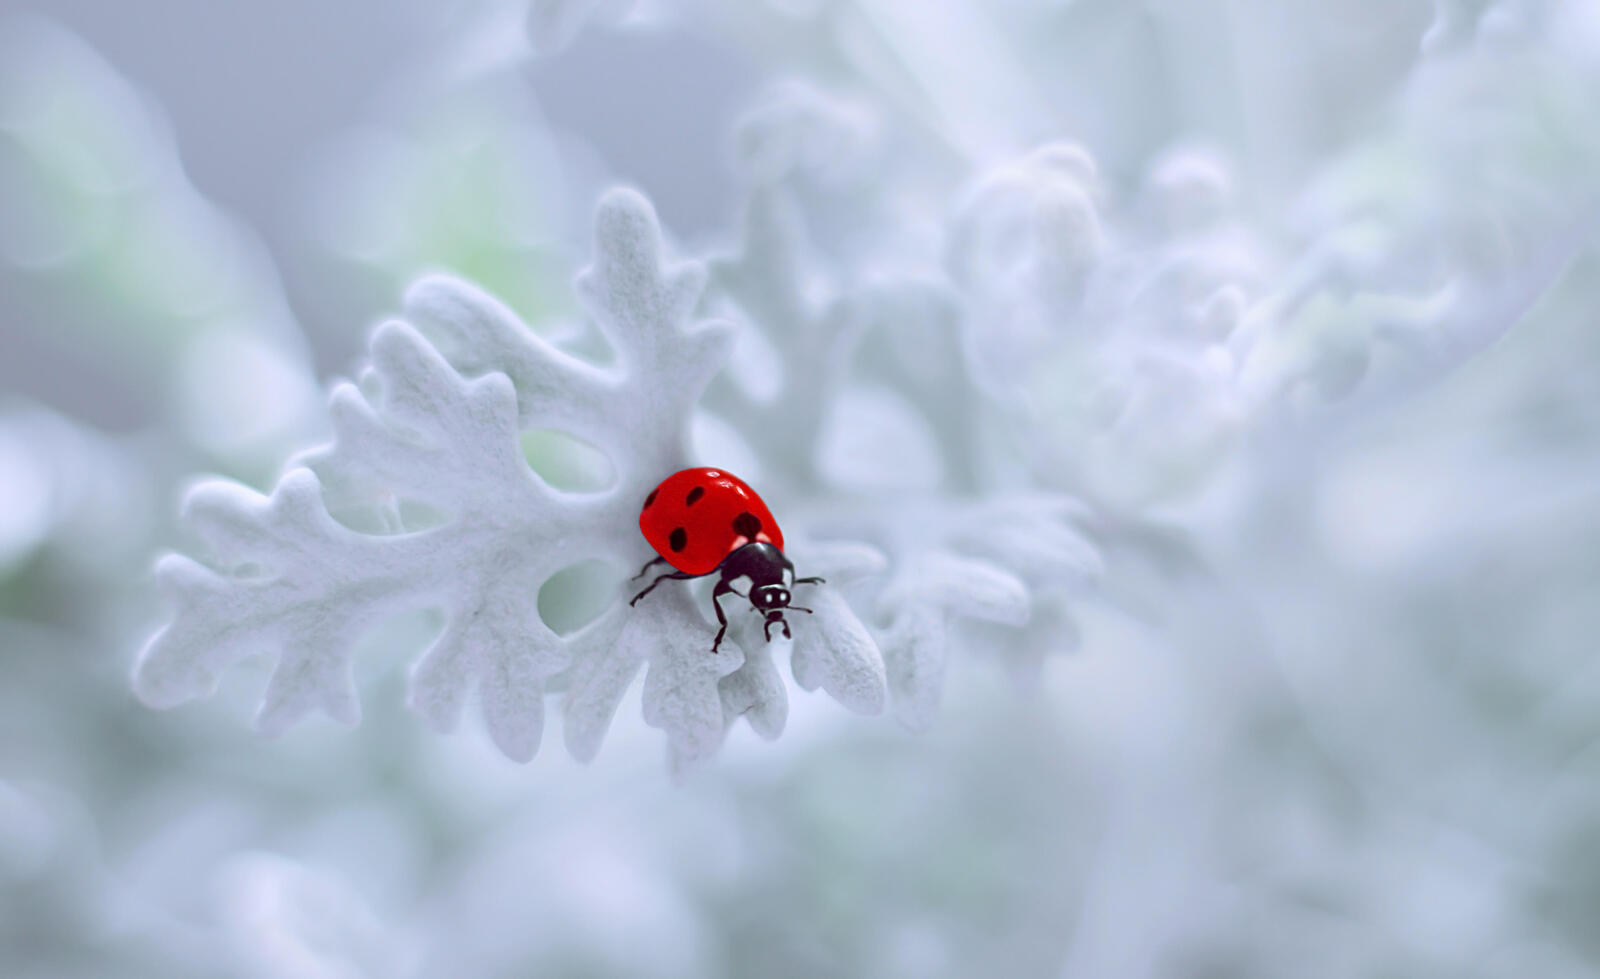 Wallpapers insects ladybug macro on the desktop